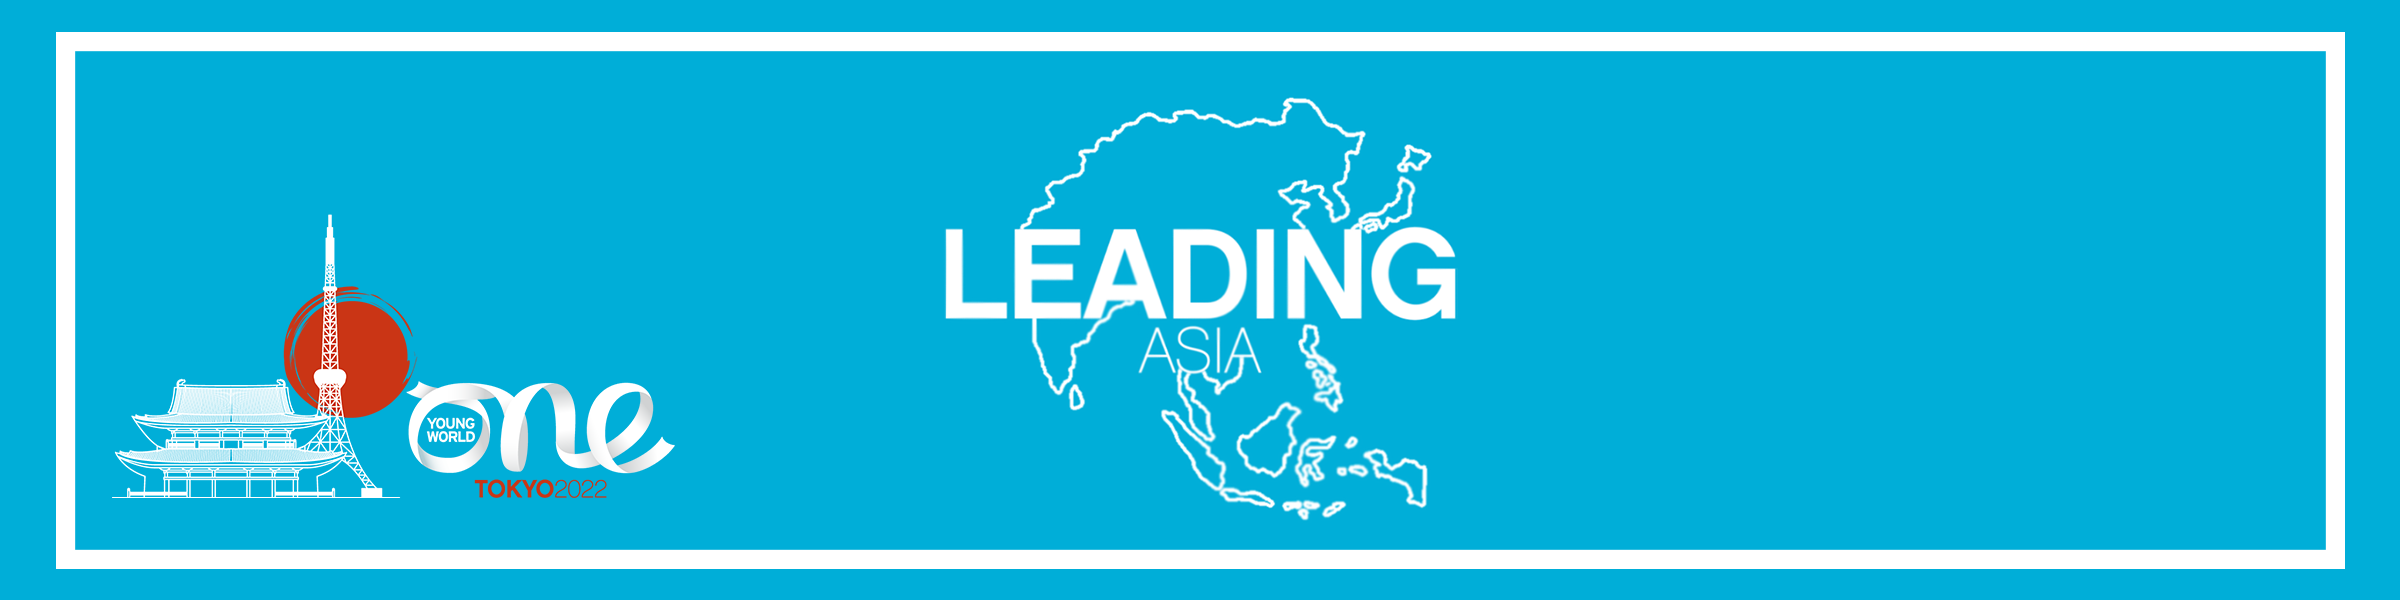 Leading Asia Scholarship Banner